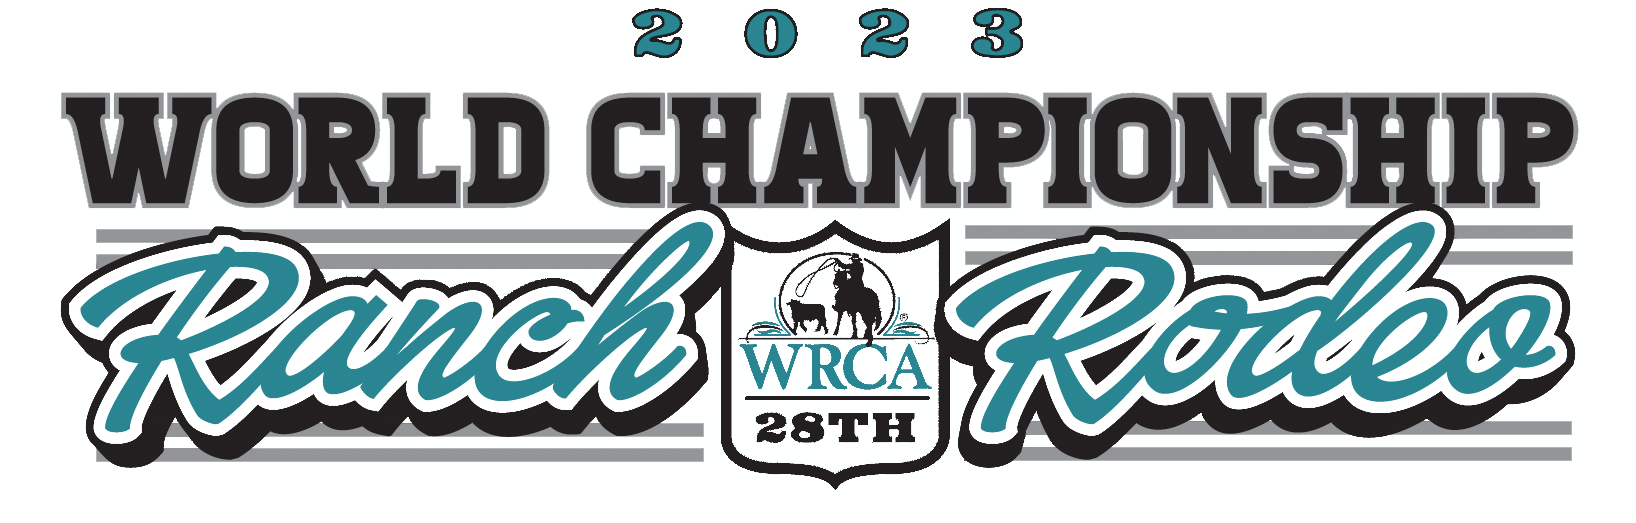 WRCA World Championship Ranch Rodeo 2023 @ WRCA World Championship Ranch Rodeo 2023 | Amarillo | Texas | United States